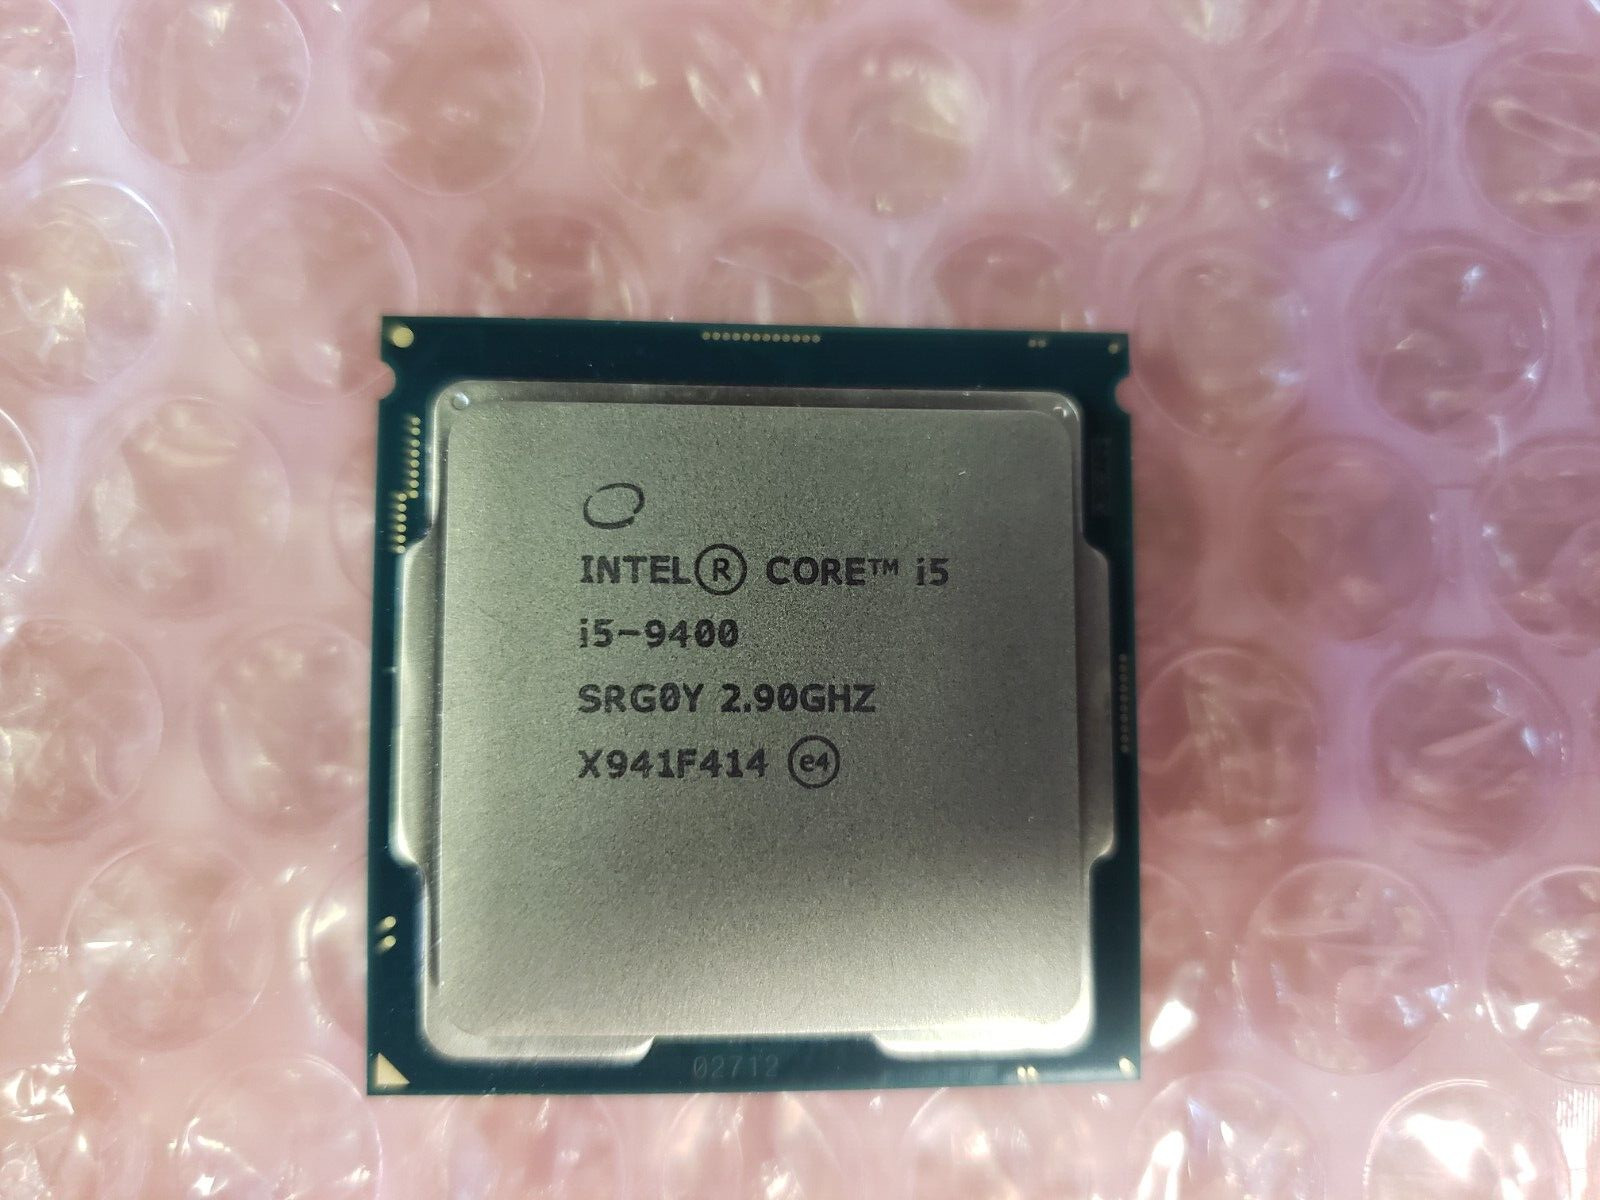 Intel Core I5-9400 2.90GHz LGA 1151 6-Core CPU Processor - SRG0Y